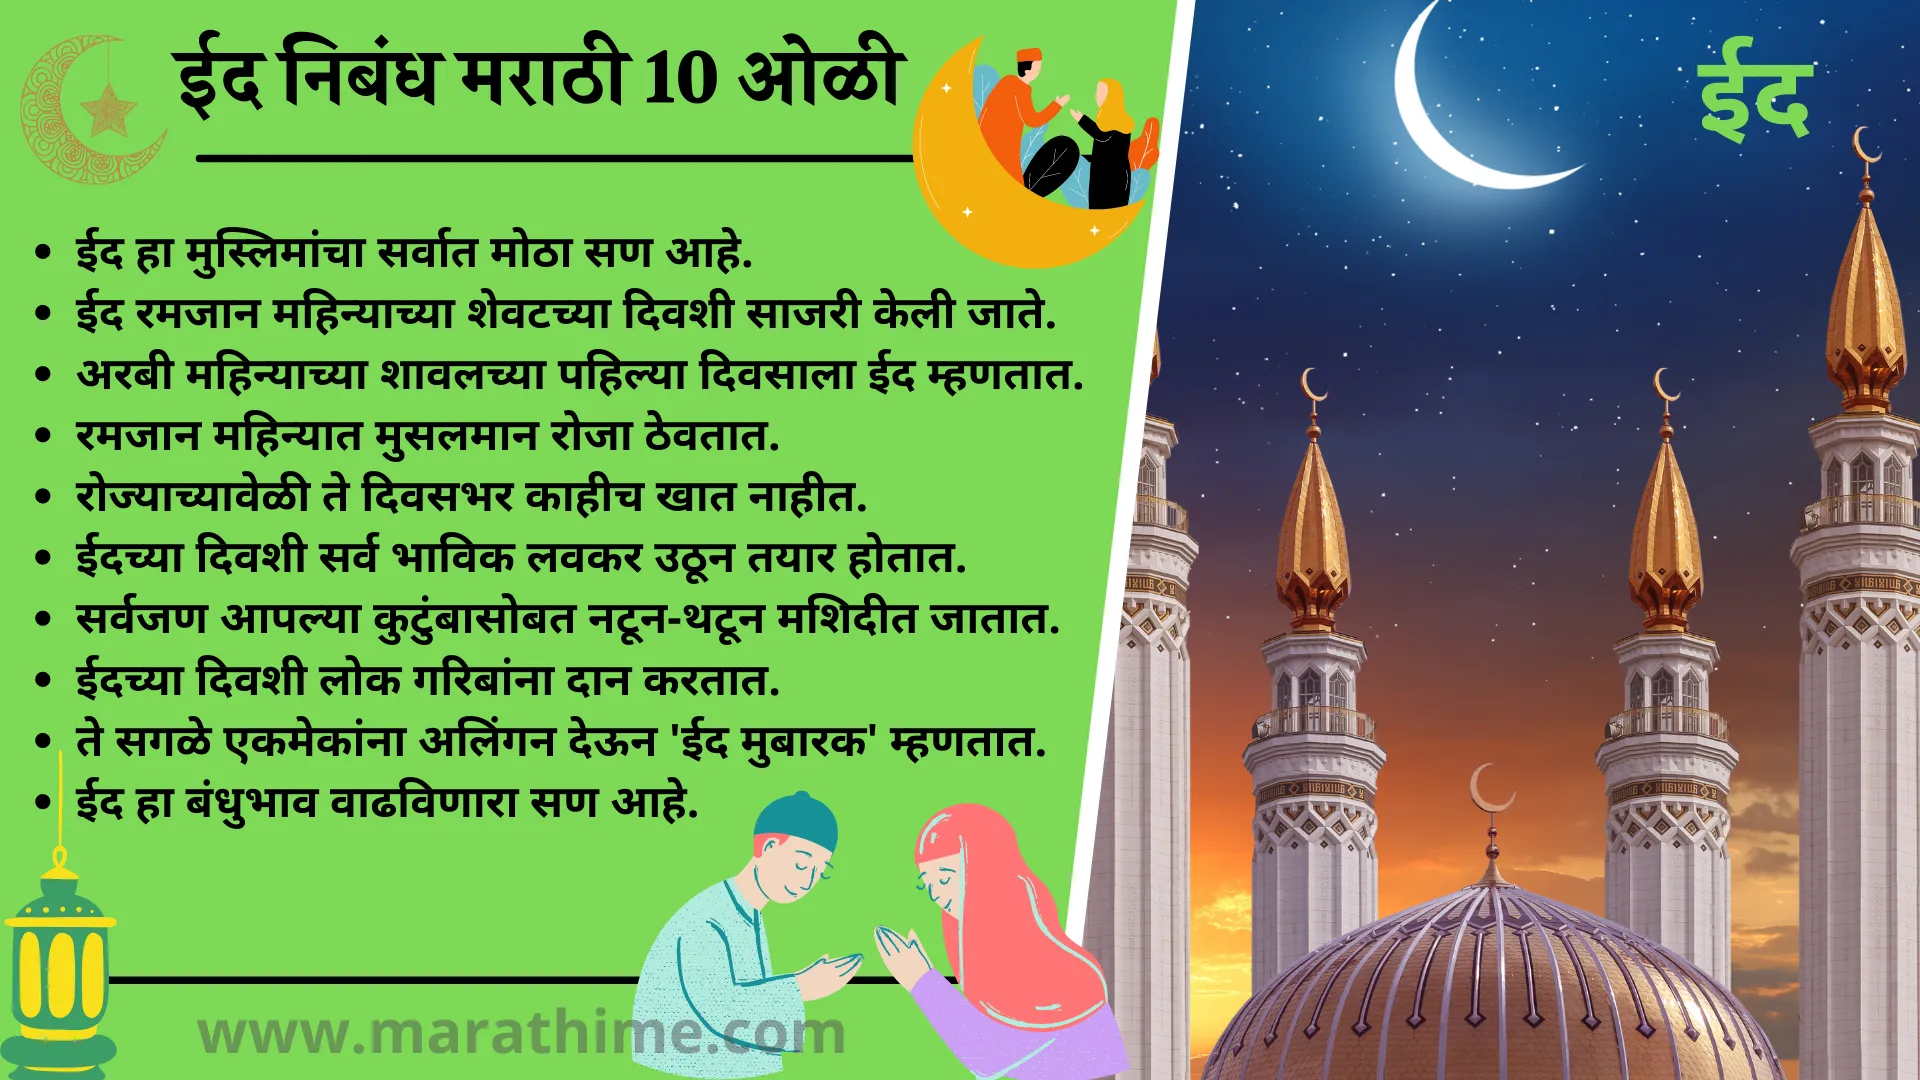 ईद निबंध मराठी 10 ओळी-10 Lines on Eid in Marathi